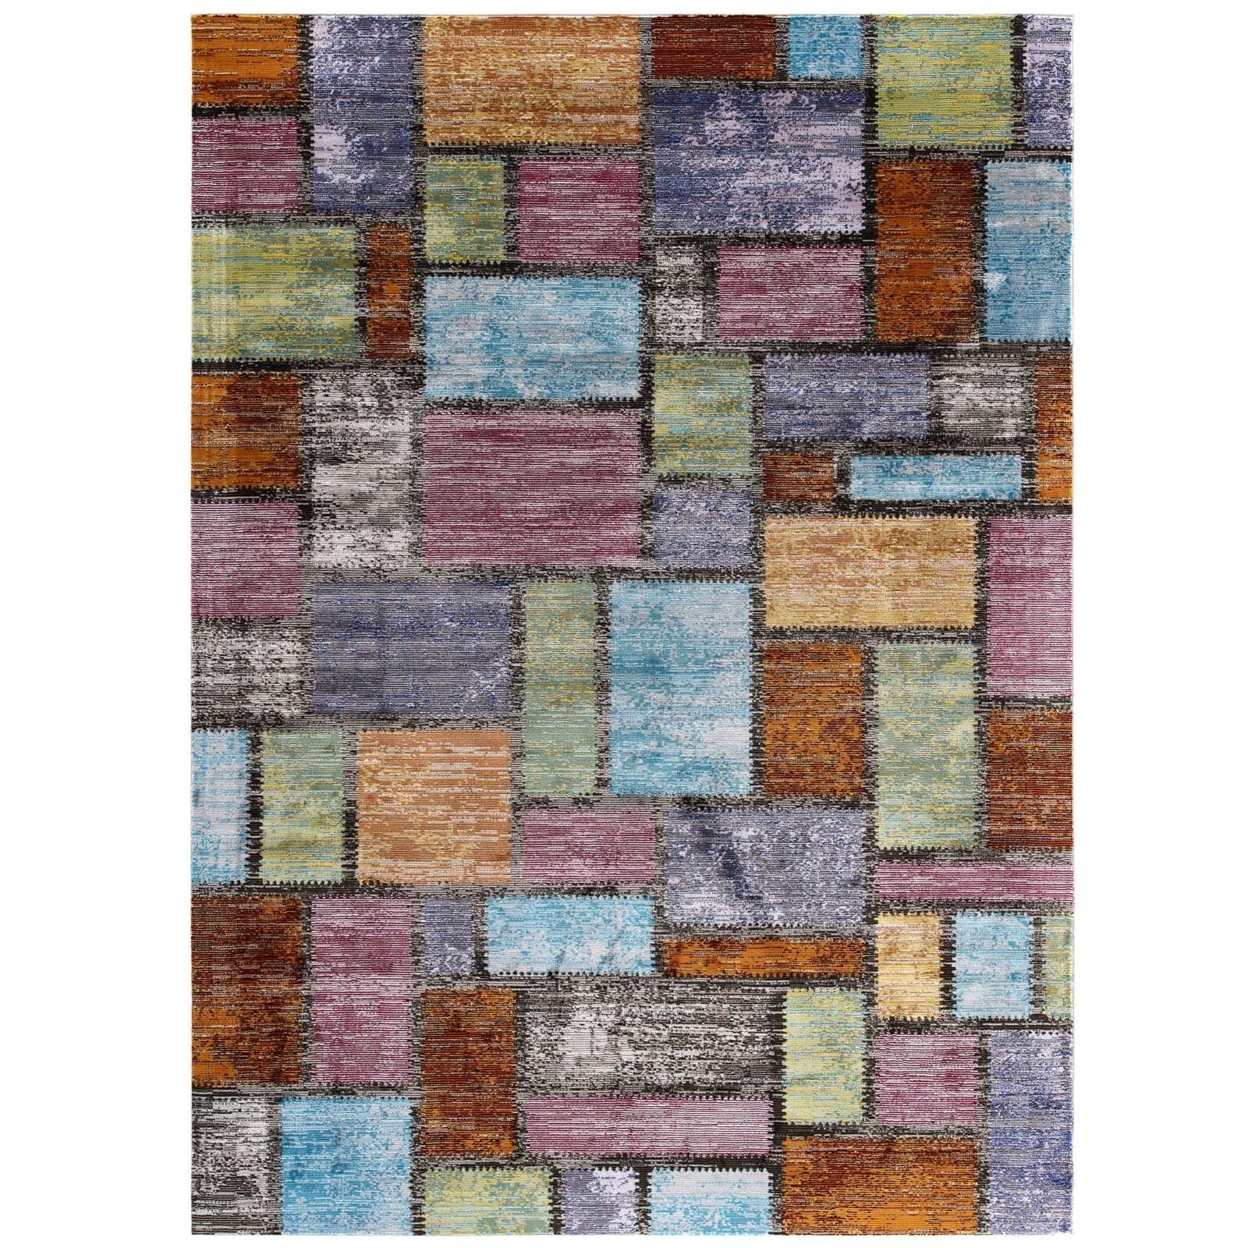 Success Nyssa Abstract Geometric Mosaic 4x6 Area Rug, Multicolored